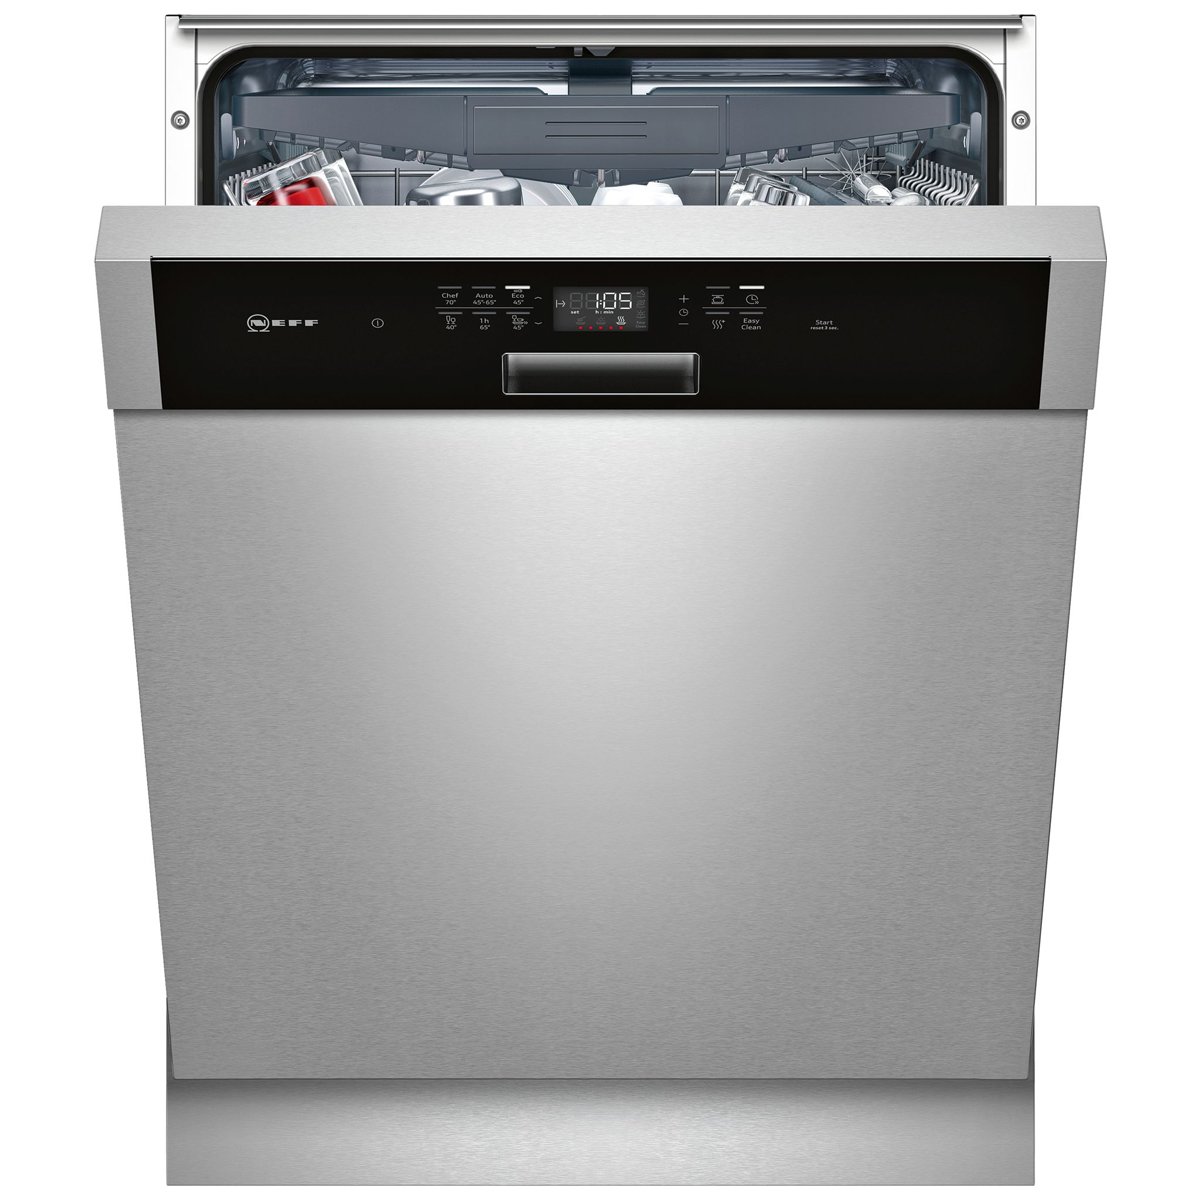 NEFF Underbench Dishwasher S215M60S0A 